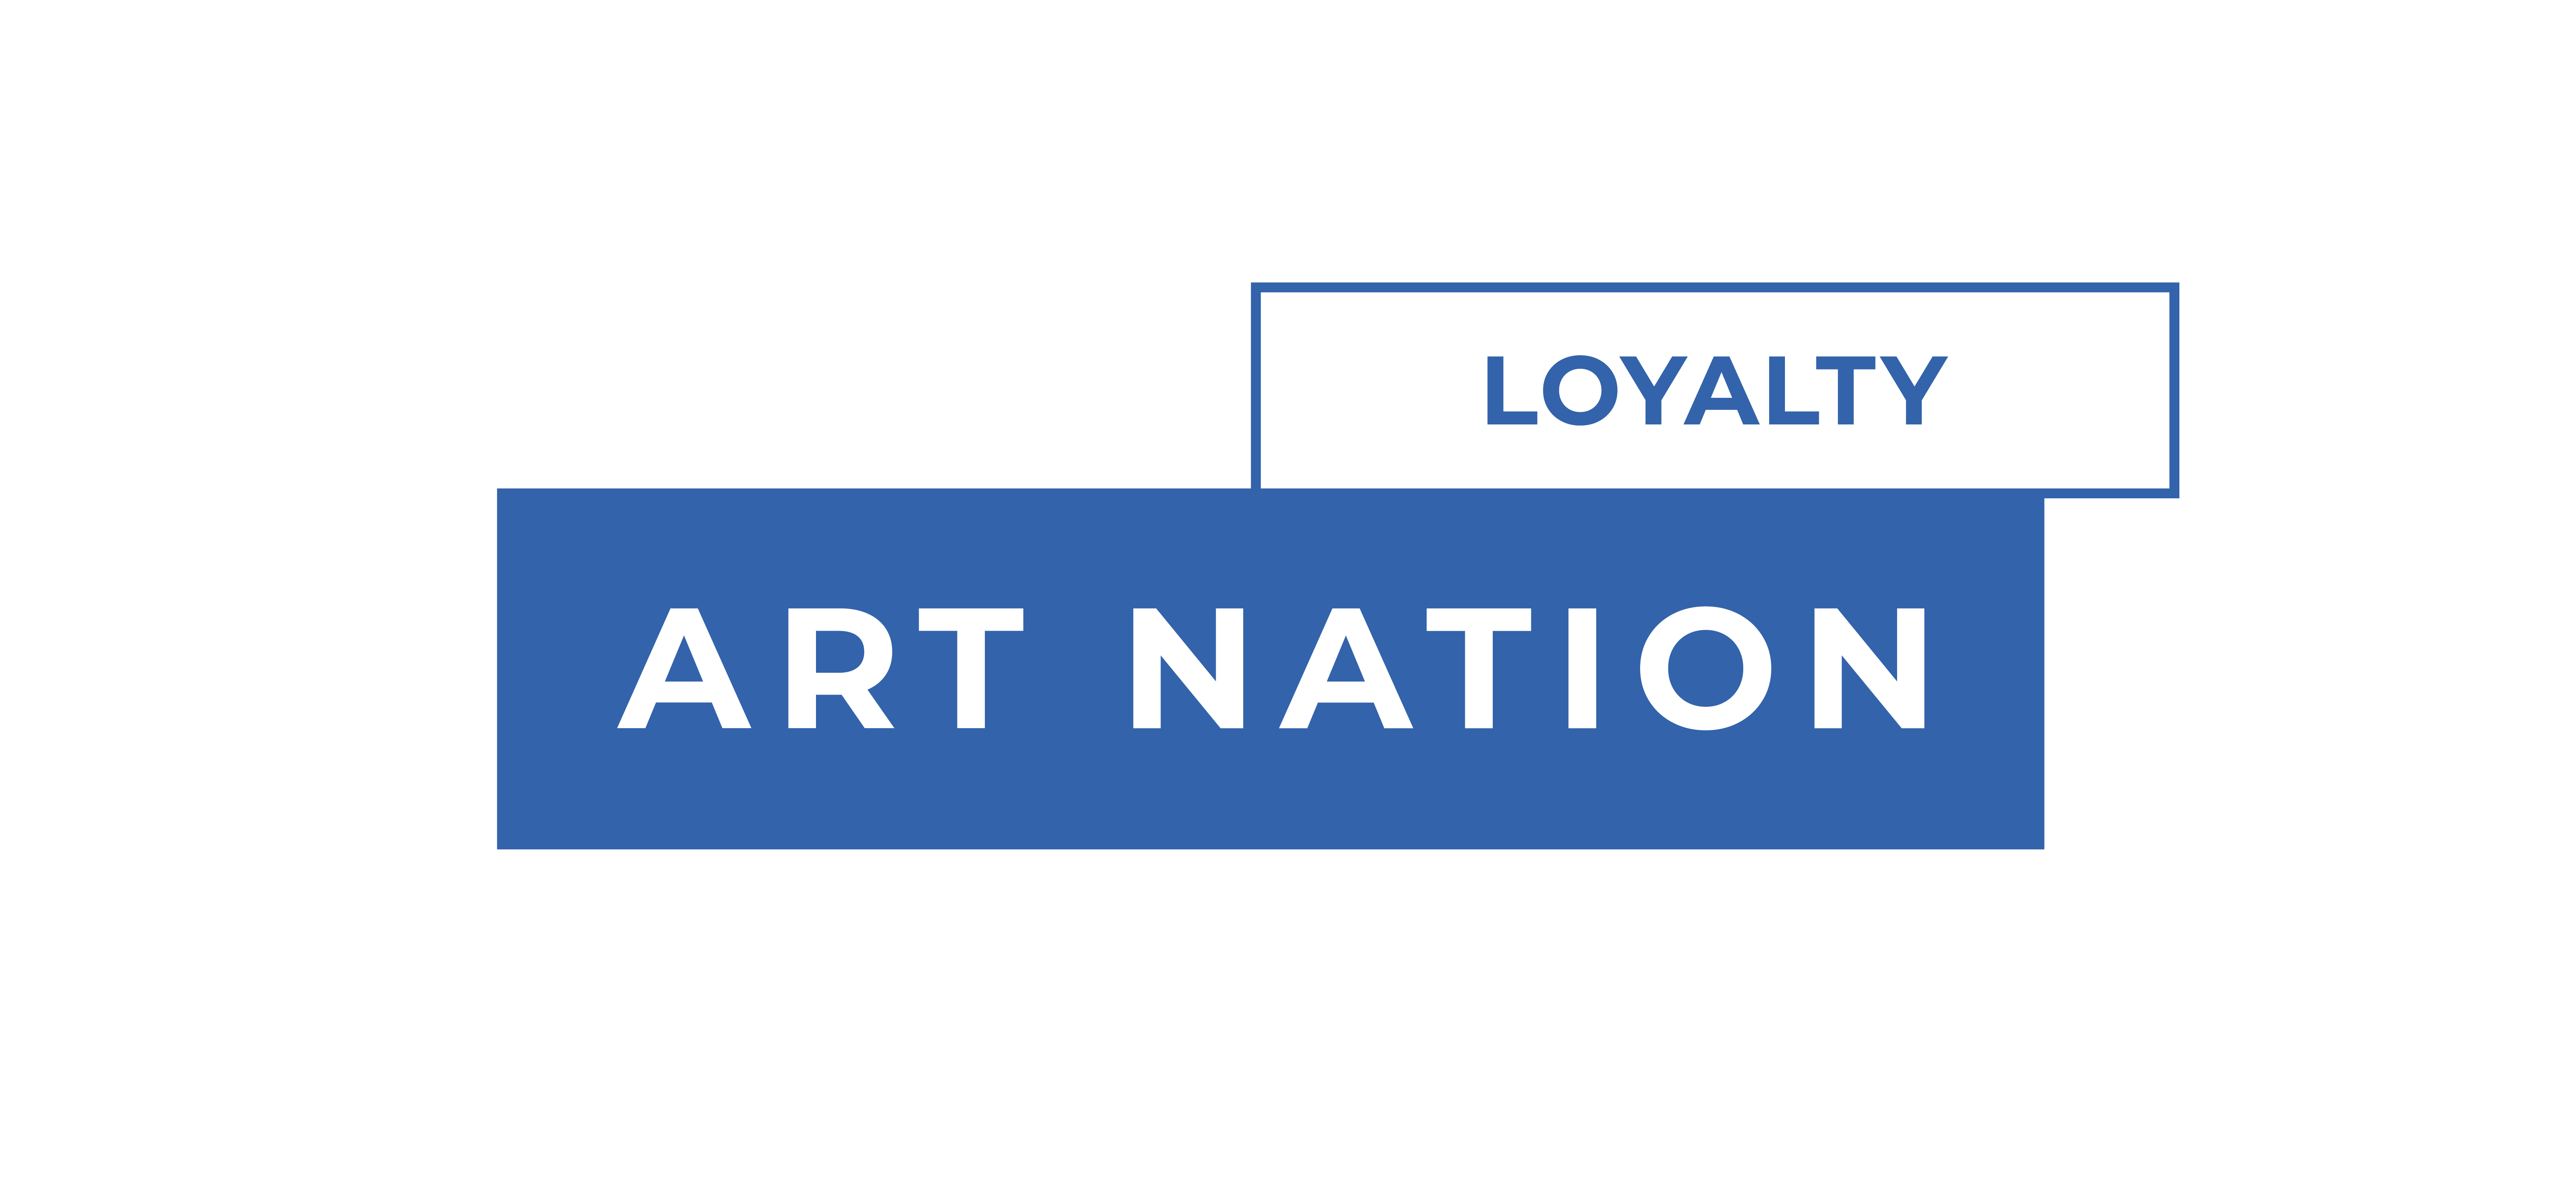 Art Nation Loyalty